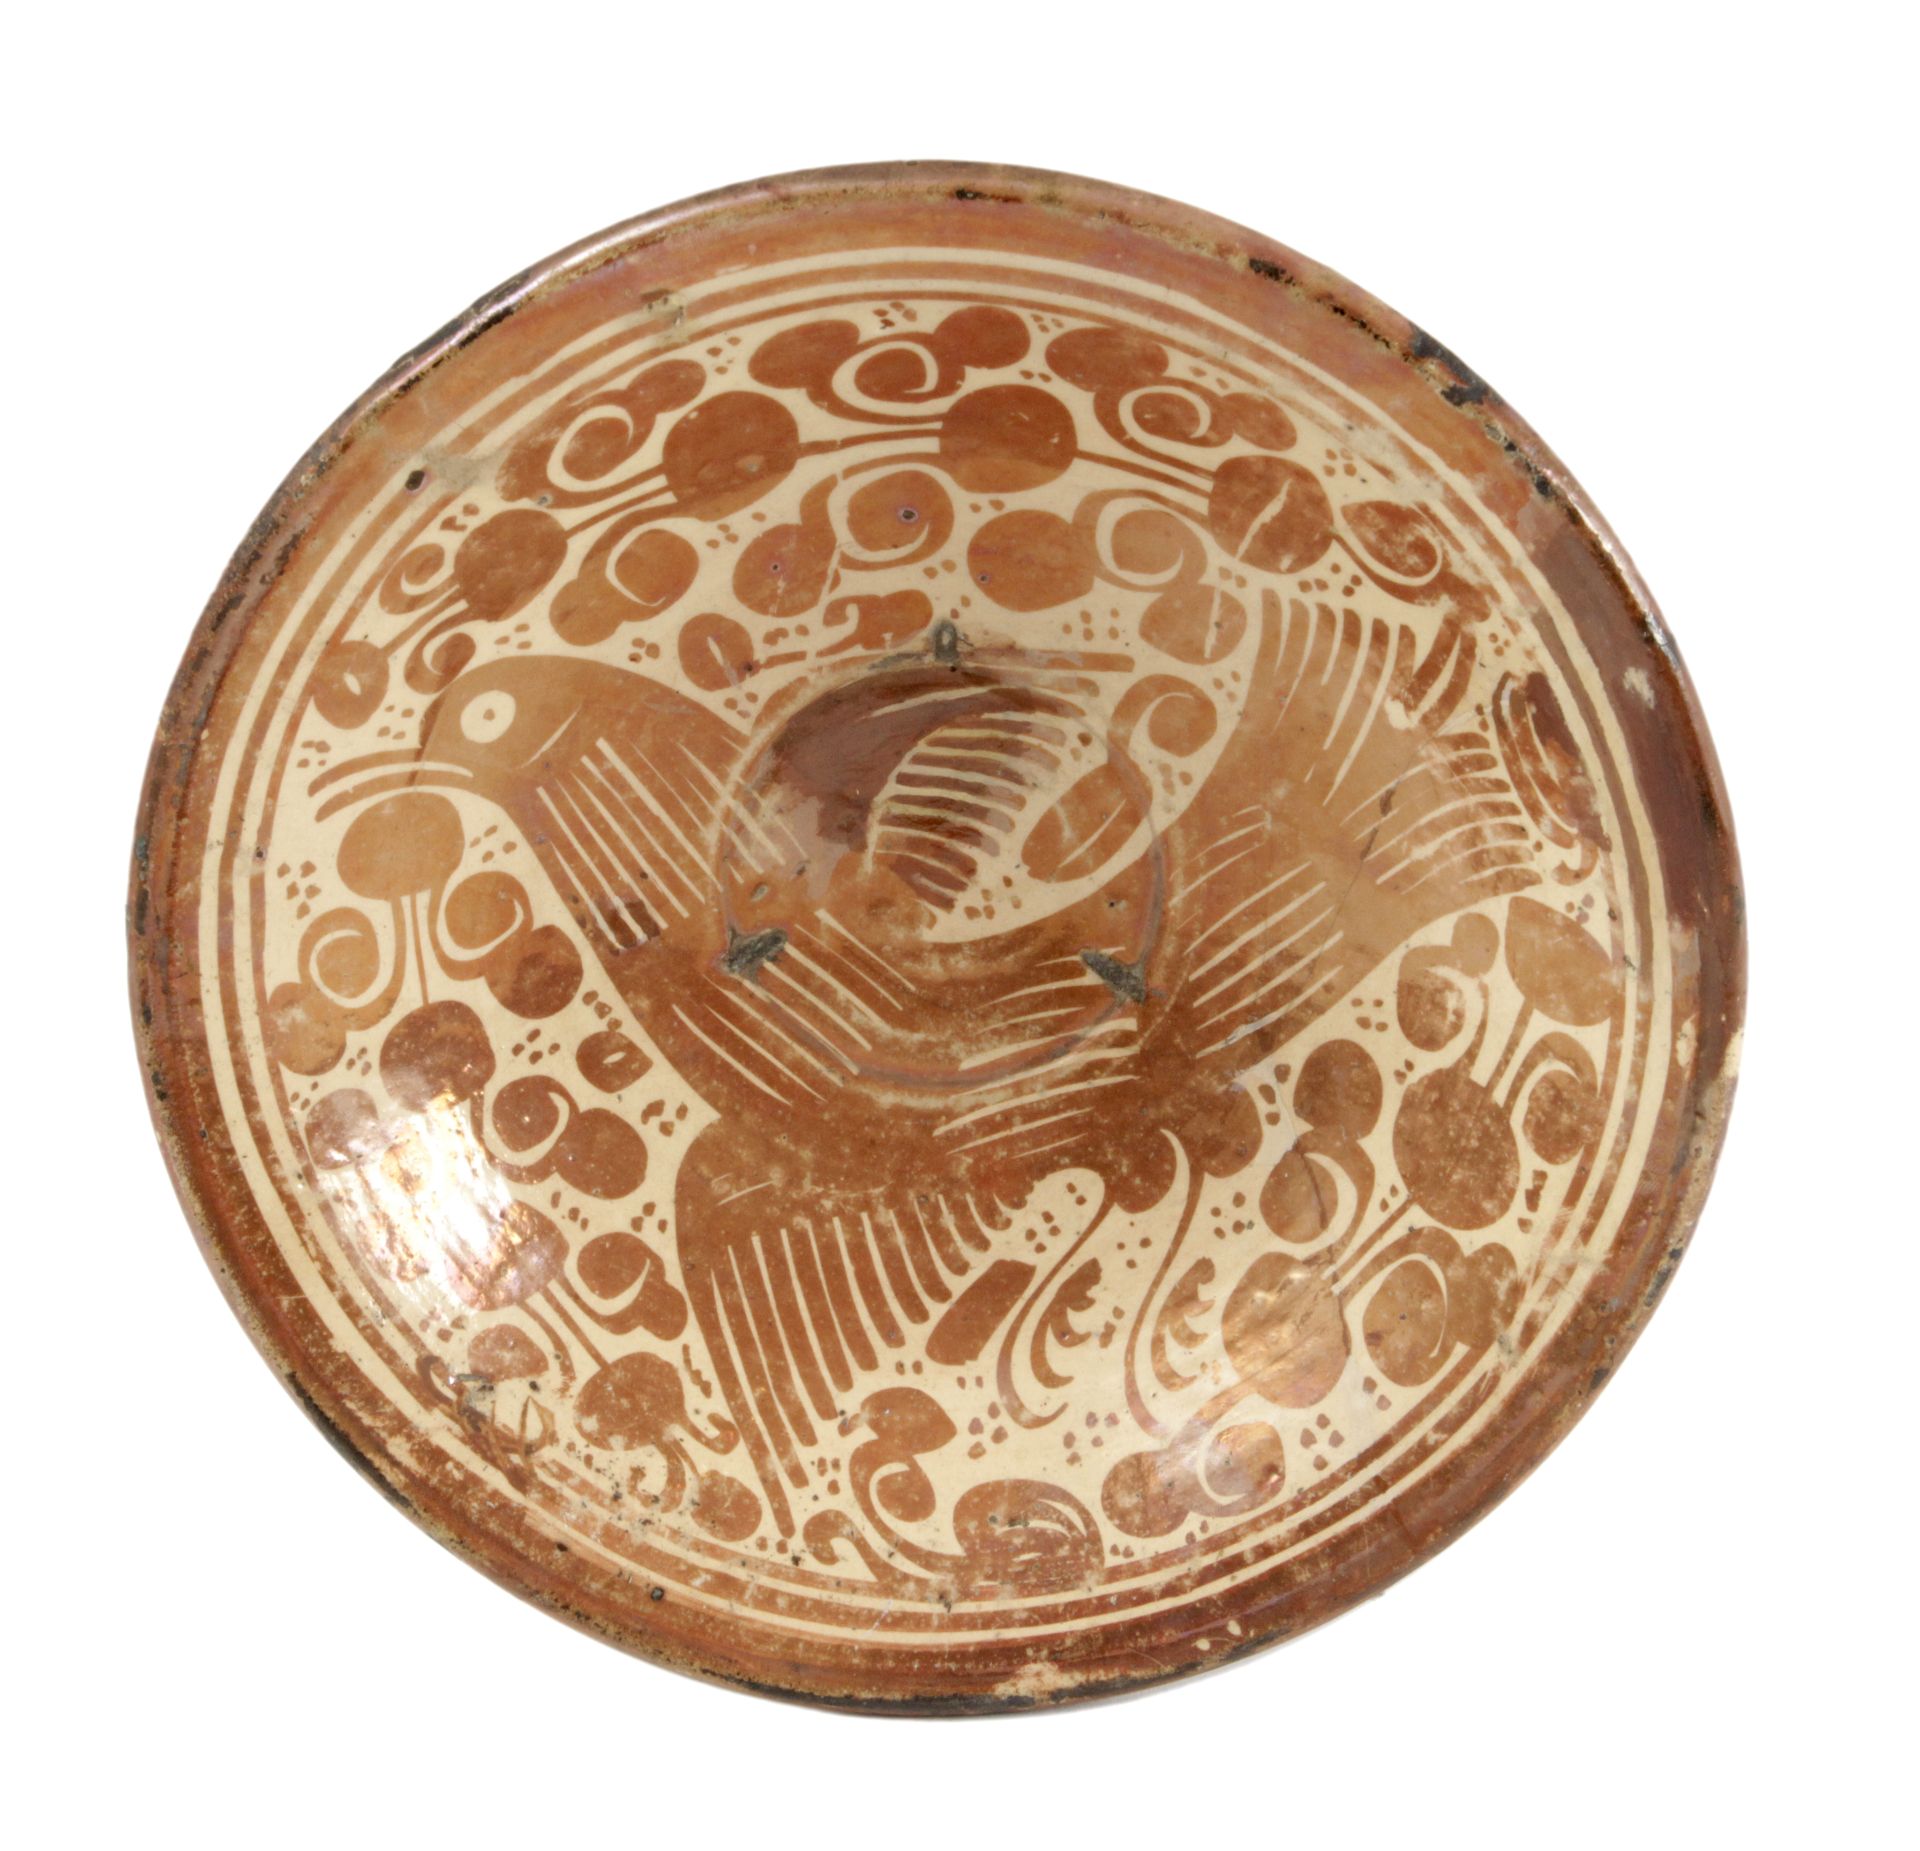 18th century decorative dish in Manises tin-glazed pottery